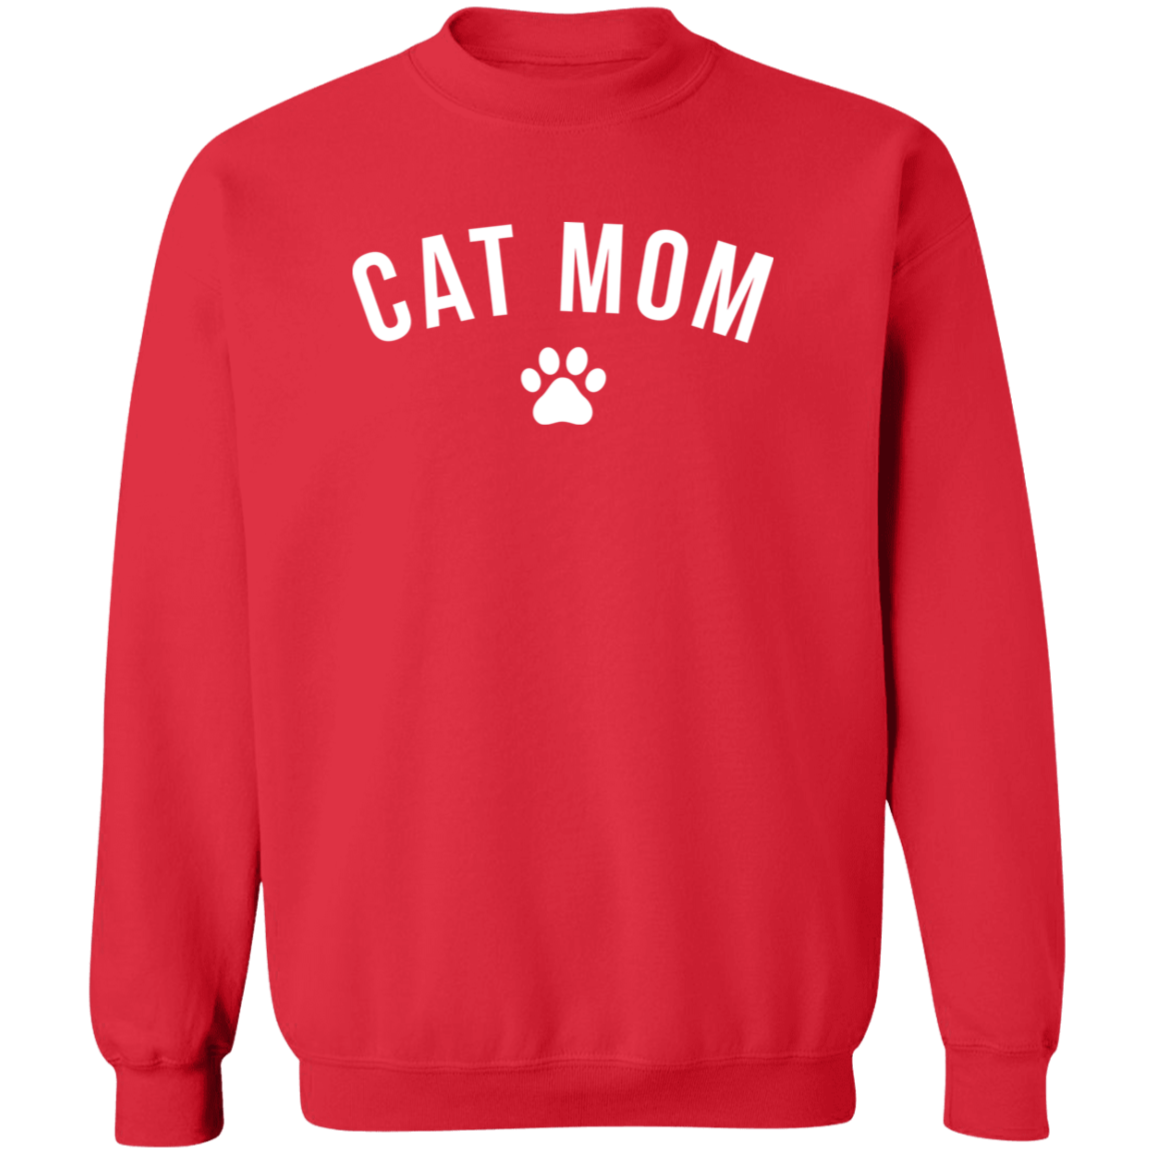 Cat Mom Sweatshirt